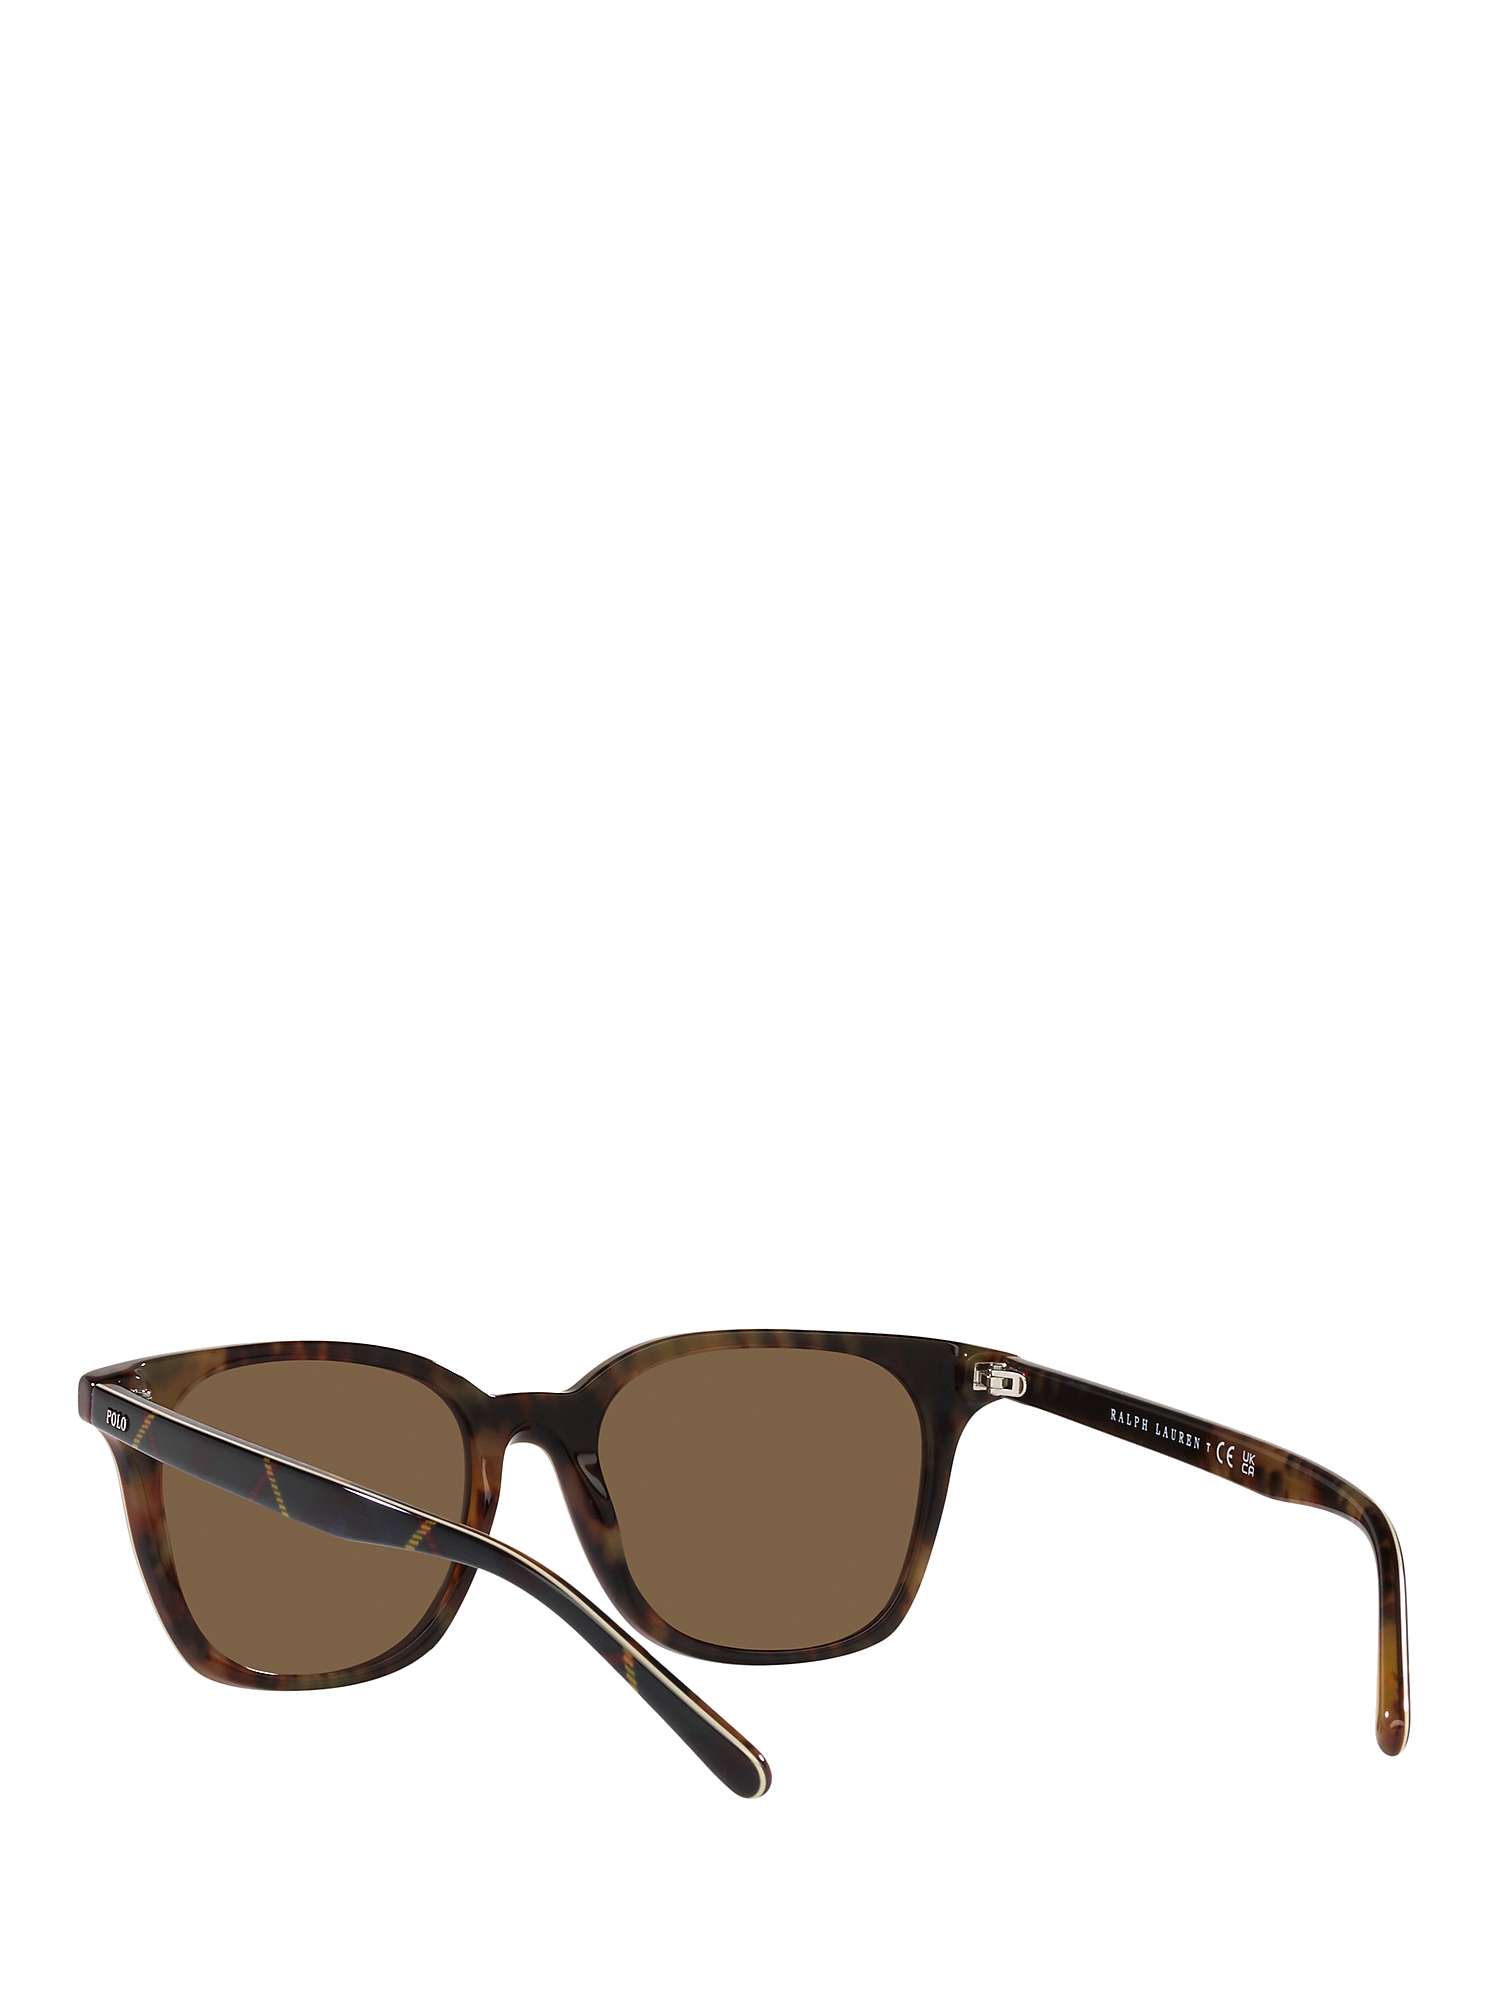 Buy Polo Ralph Lauren PH4187 Men's Sunglasses Online at johnlewis.com